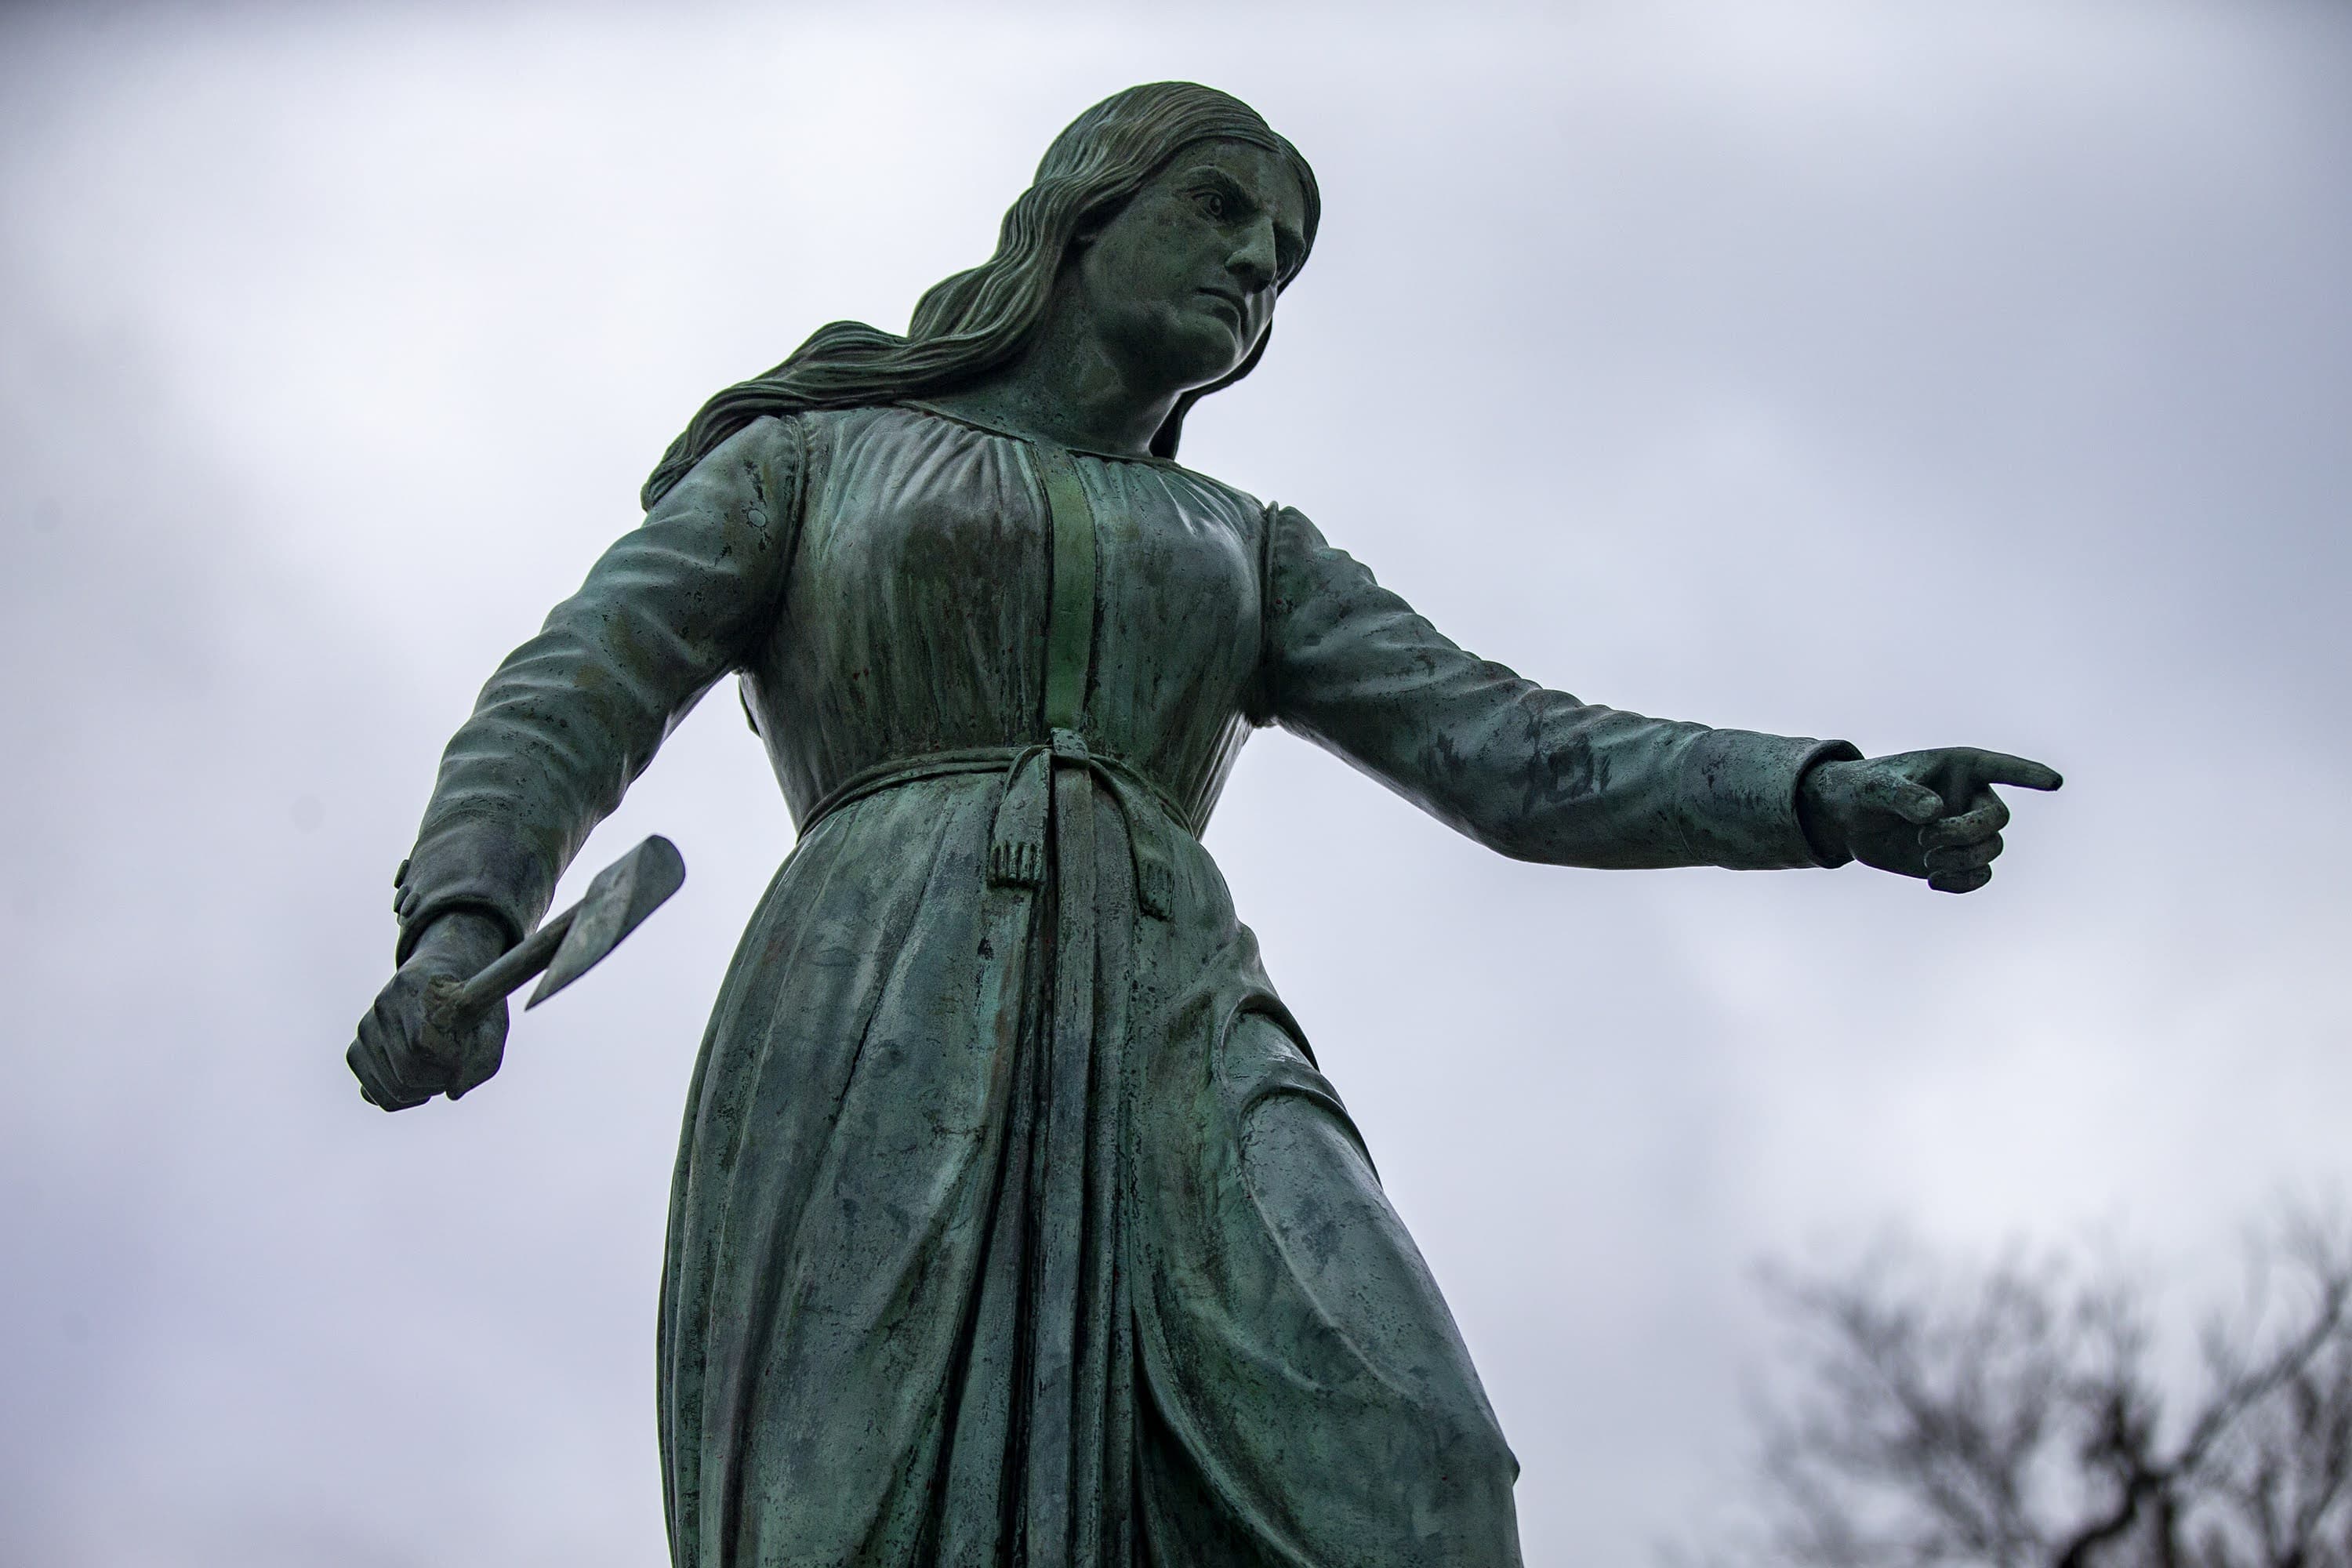 The Hannah Duston statue in G.A.R. Park in Haverhill. (Jesse Costa/WBUR)